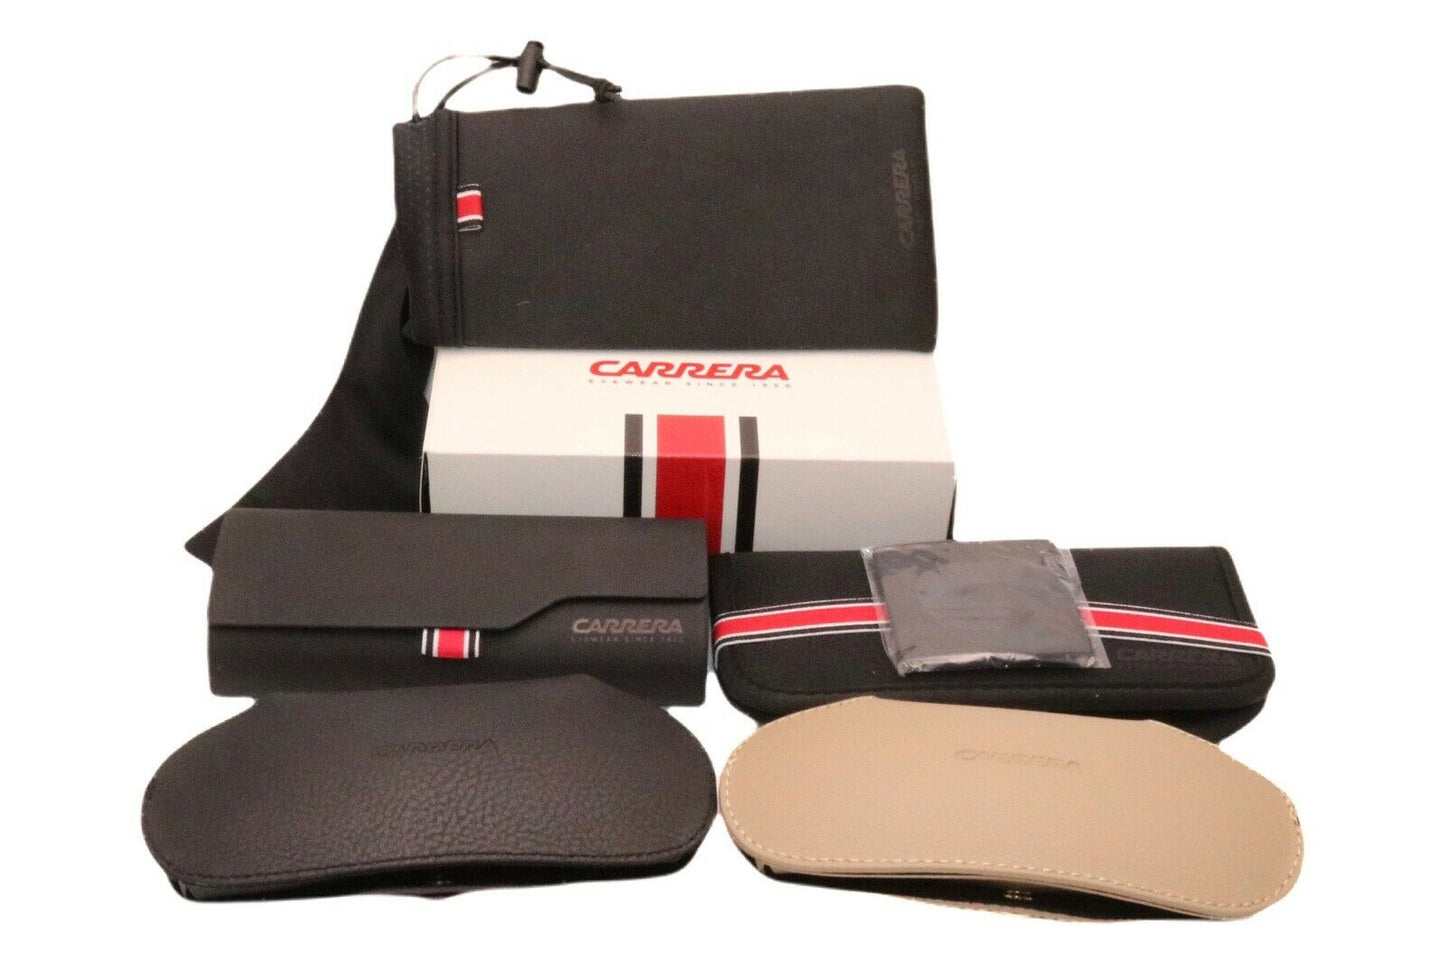 Carrera 1048/S-0003 UC 58mm New Sunglasses